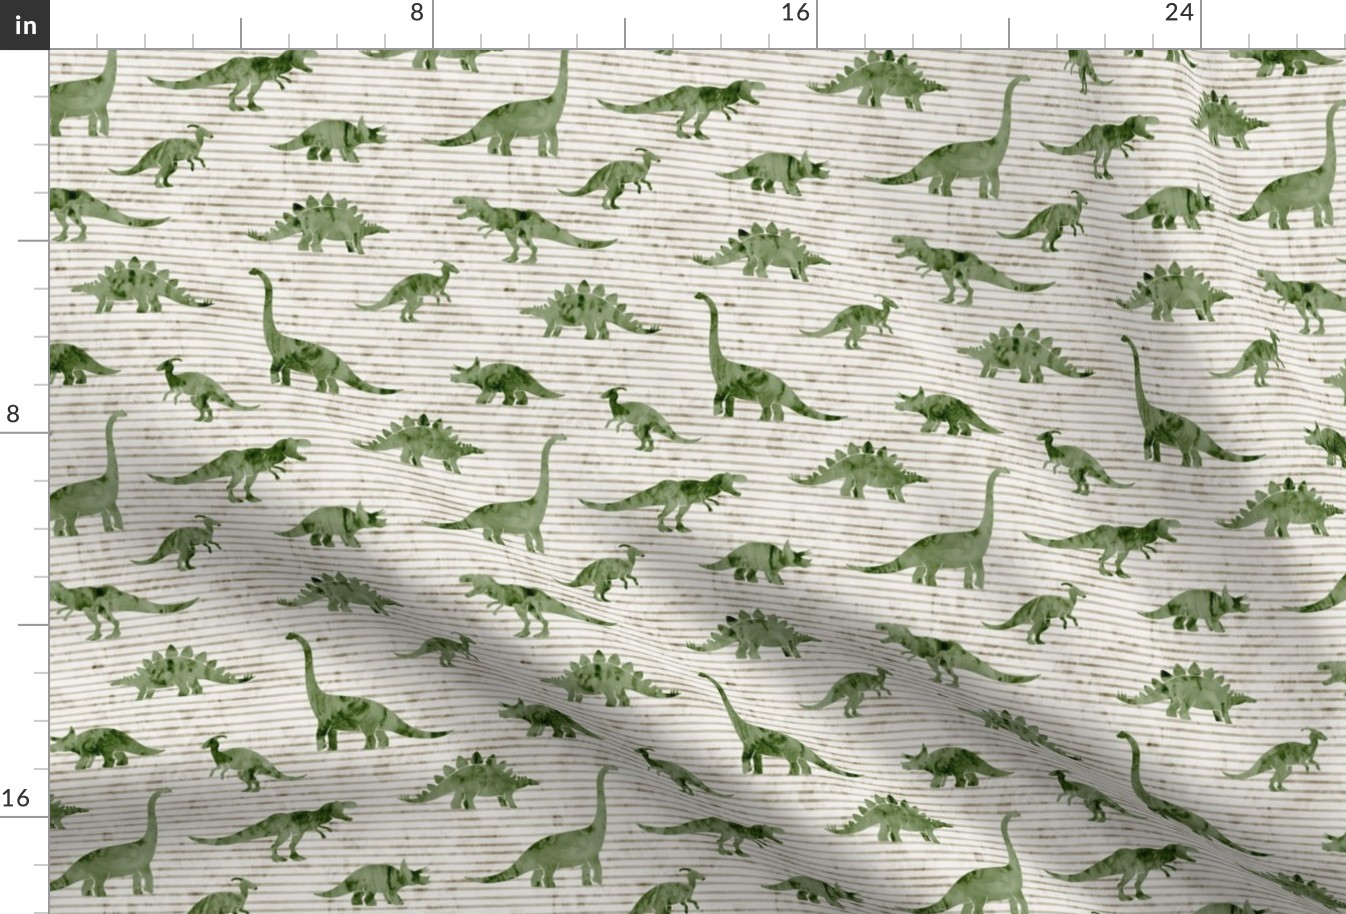 Dinosaurs - Dinos watercolor - sage on beige stripes - LAD19